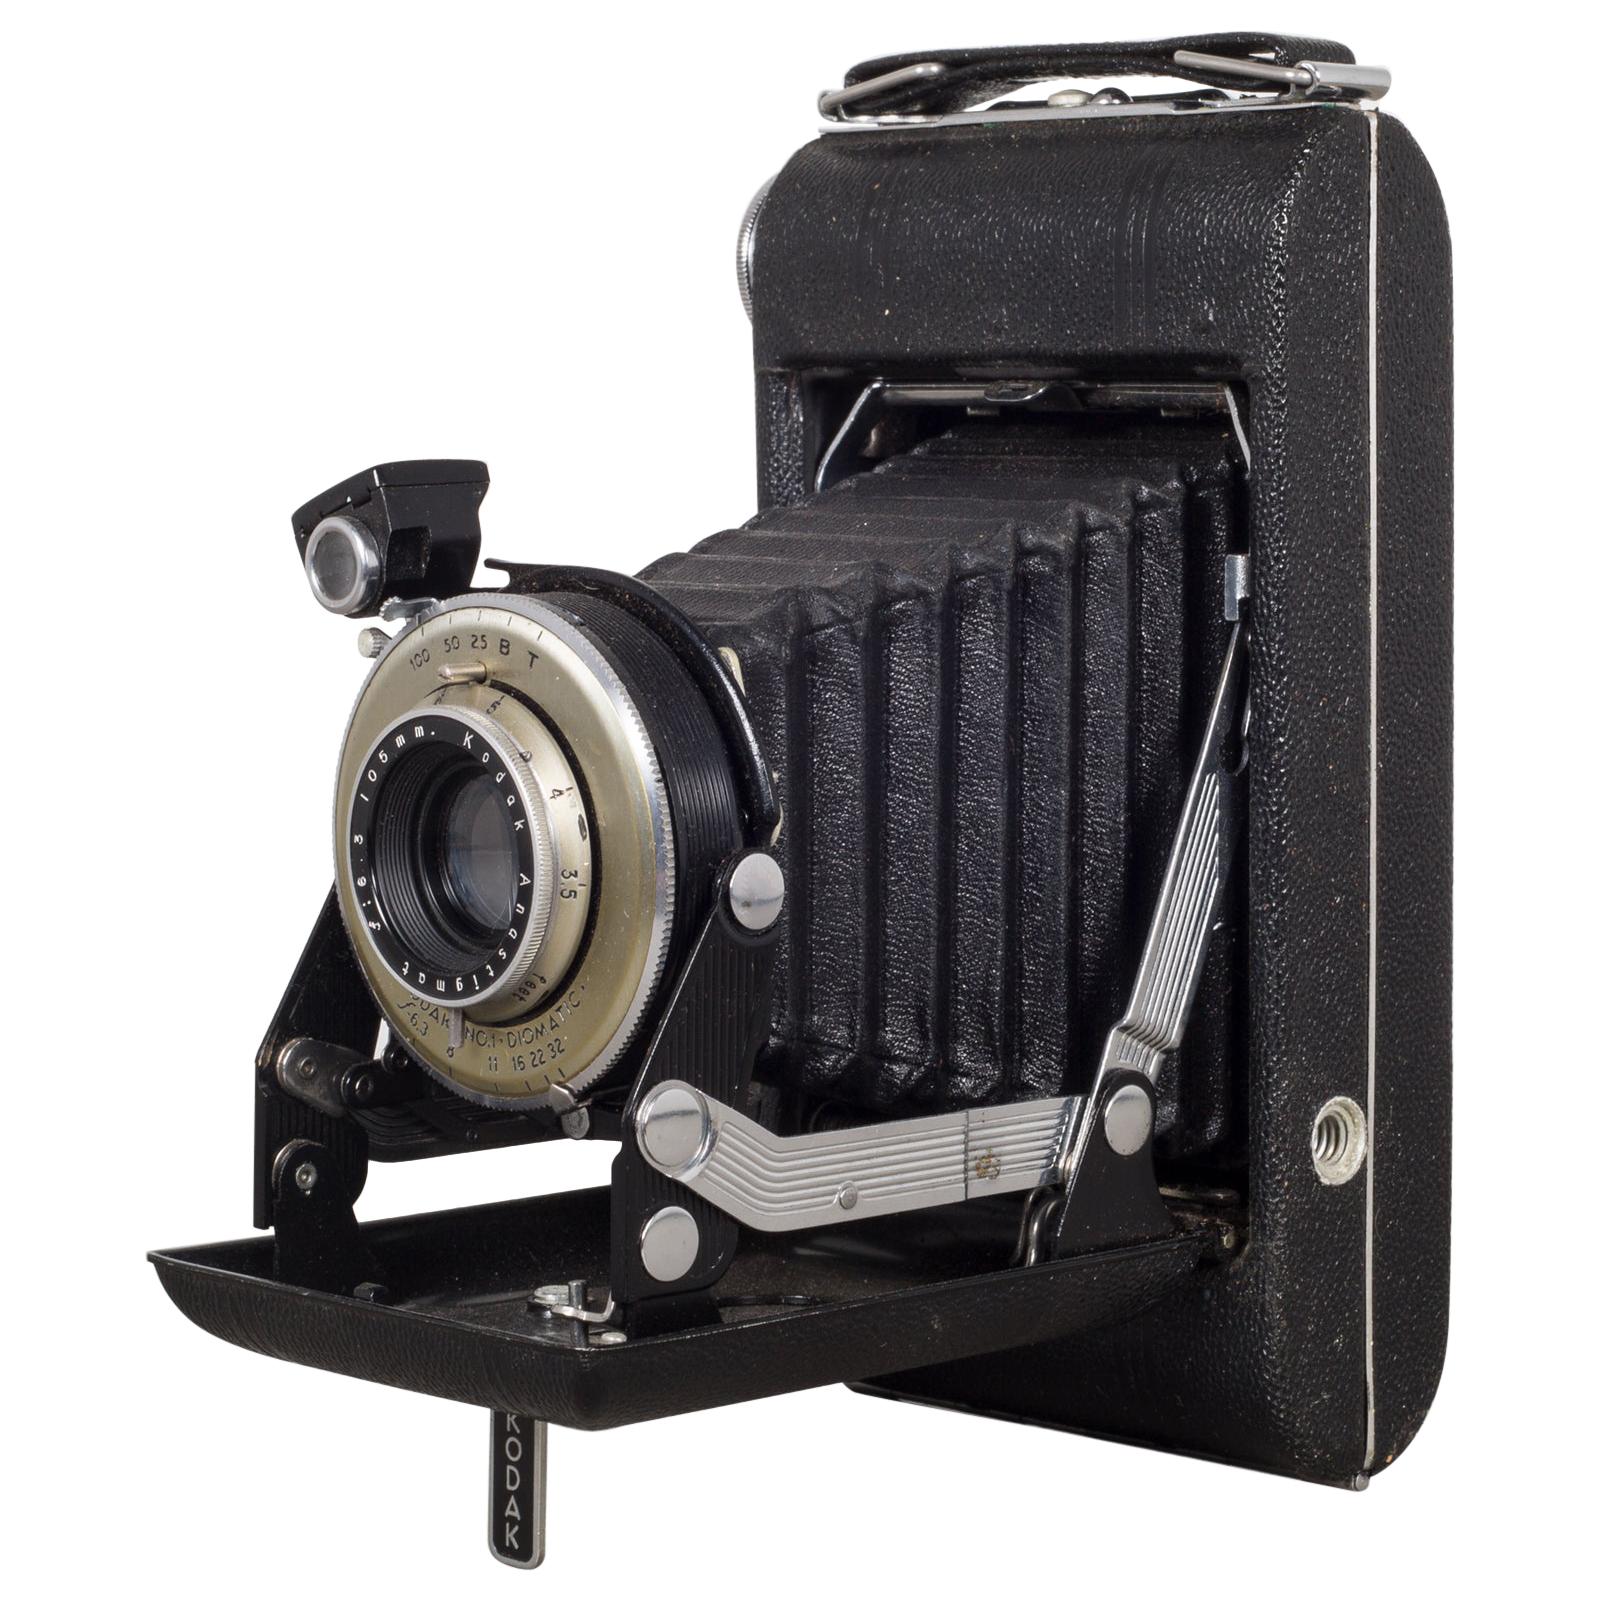 Antique Kodak "No. 1 Diomatic" Folding Camera and Leather Case, circa 1930